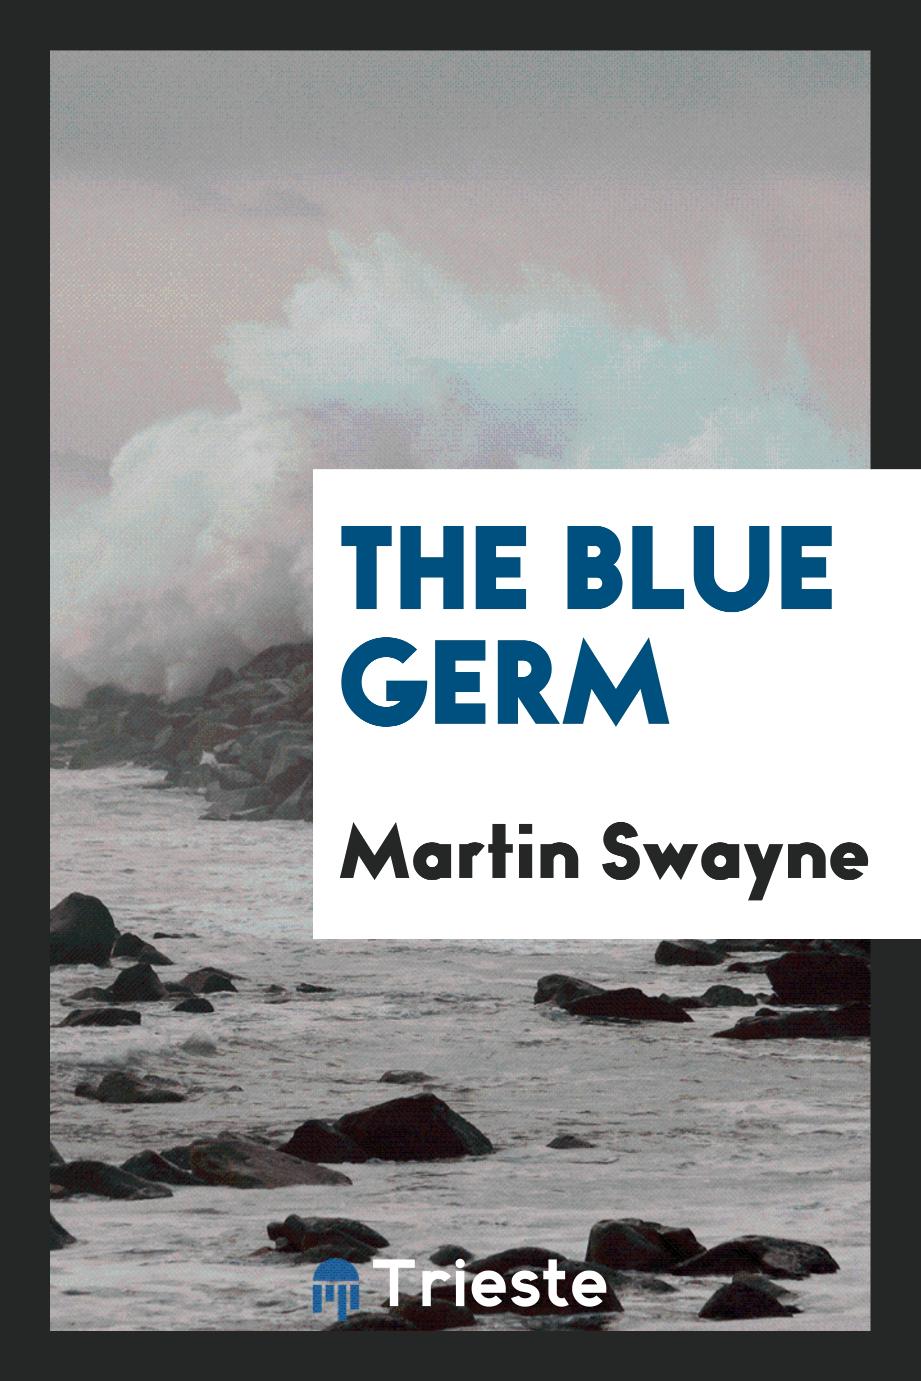 The blue germ